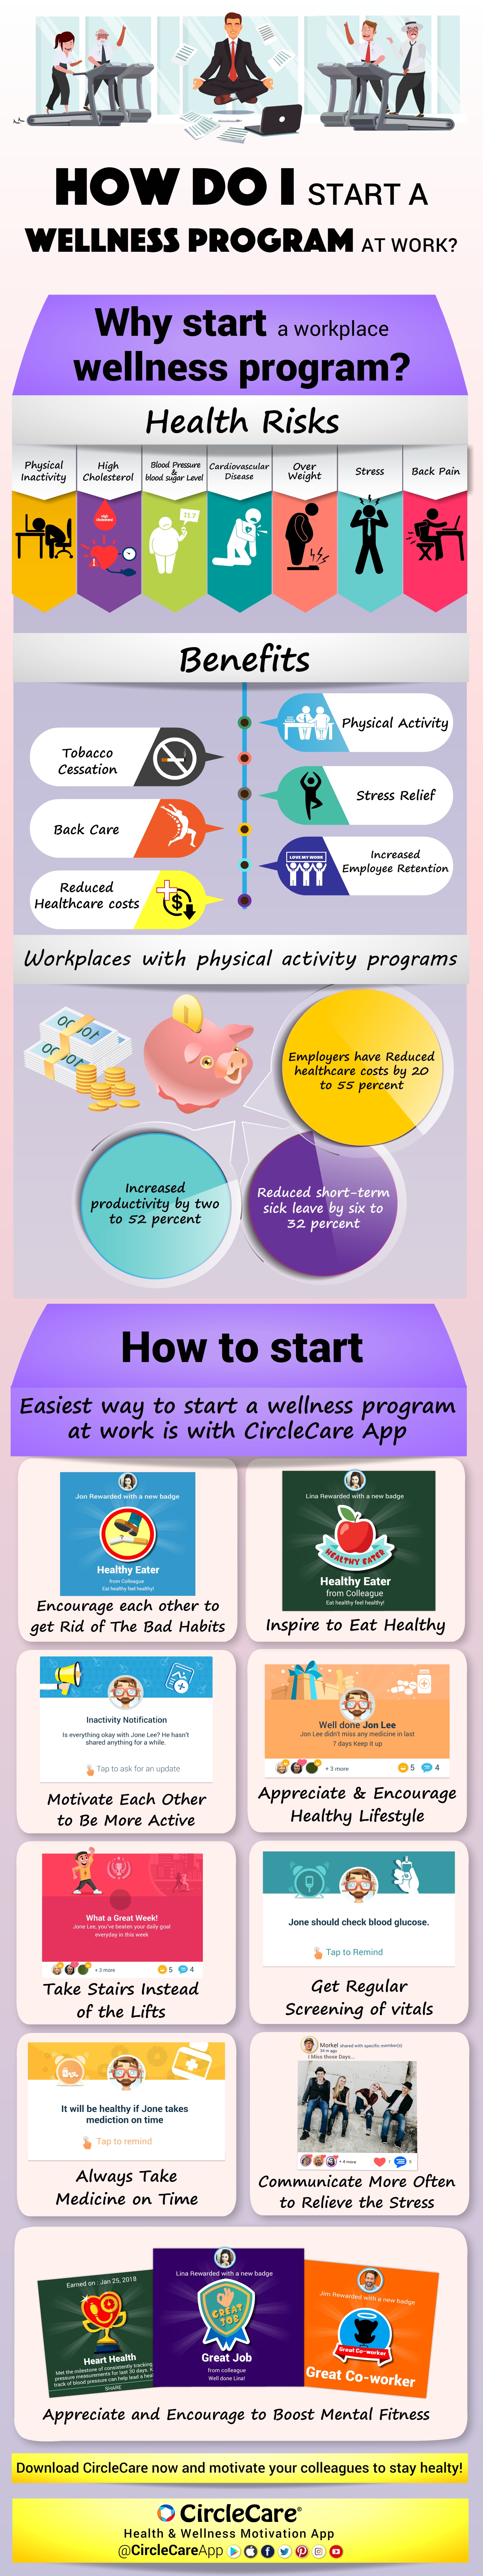 How-do-I-start-a-wellness-program-at-work-with-circlecare-app